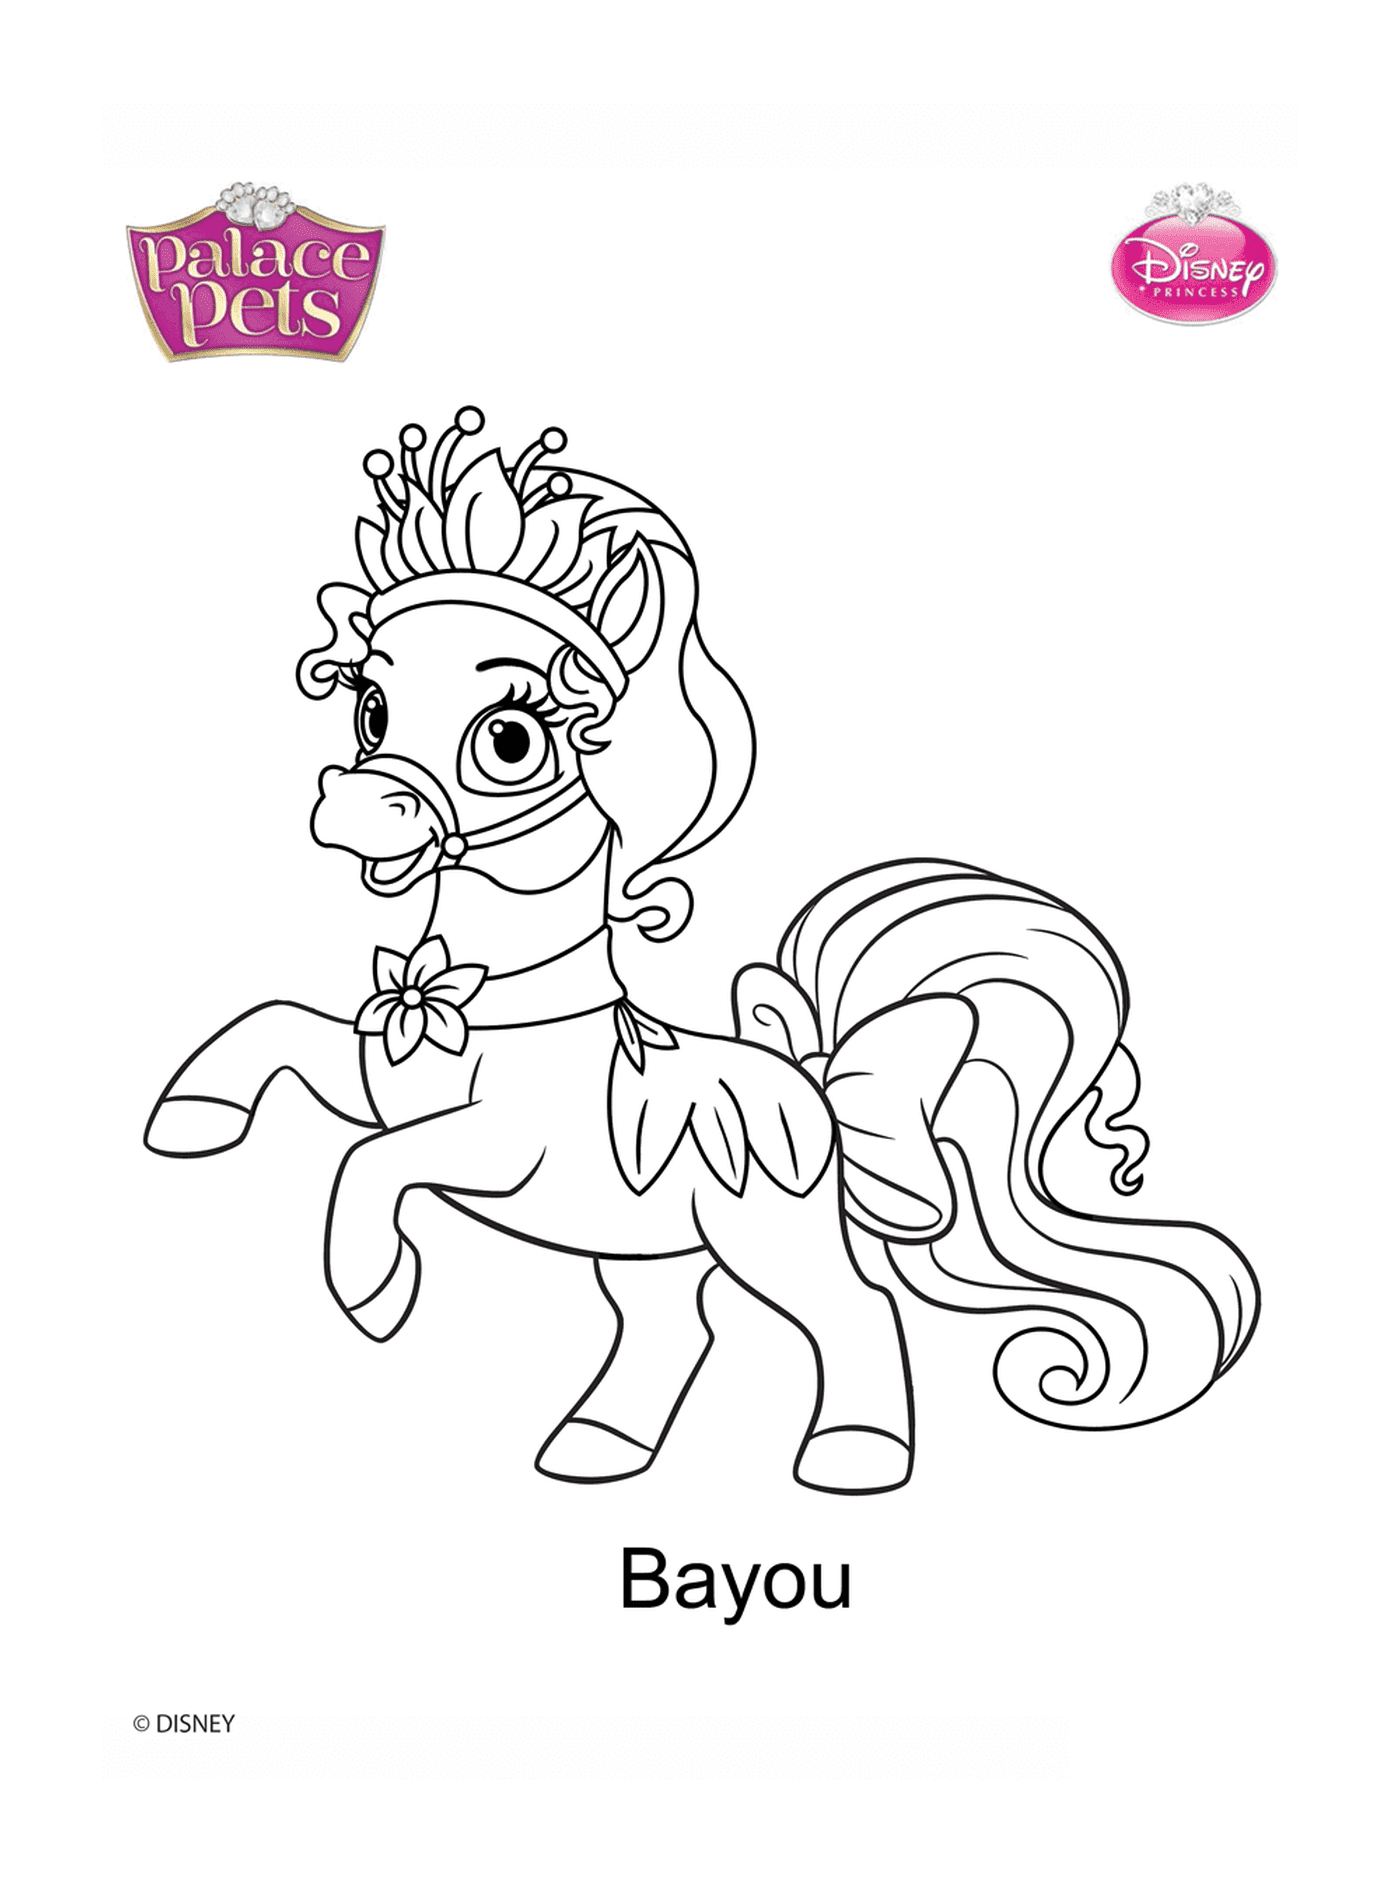  Bayou, pony princess graceful 